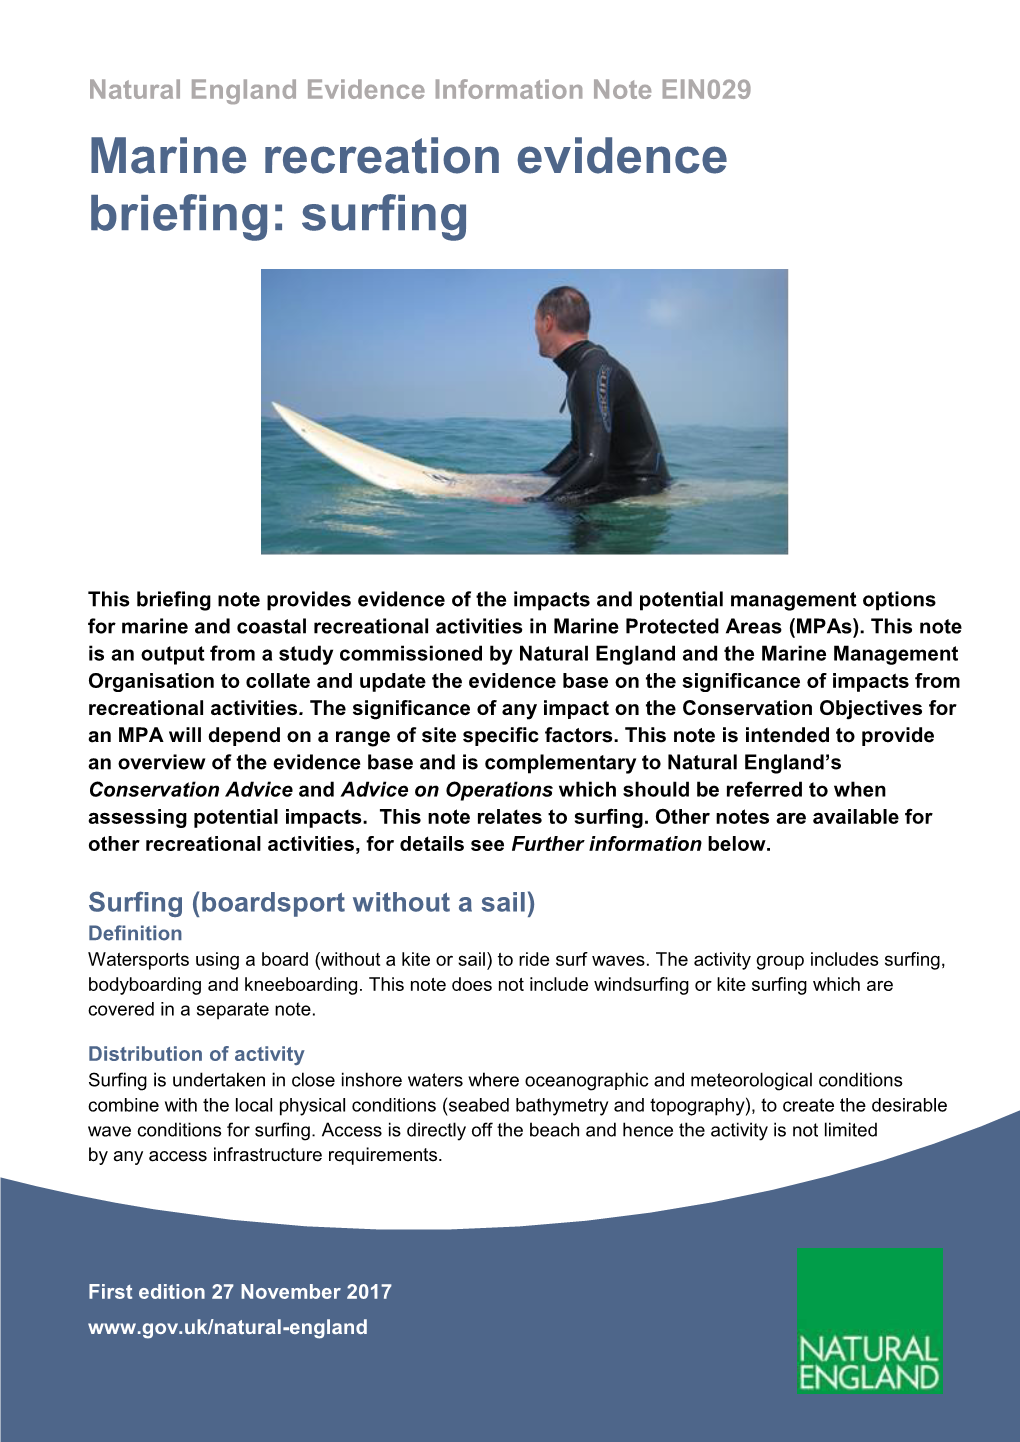 Marine Recreation Evidence Briefing: Surfing